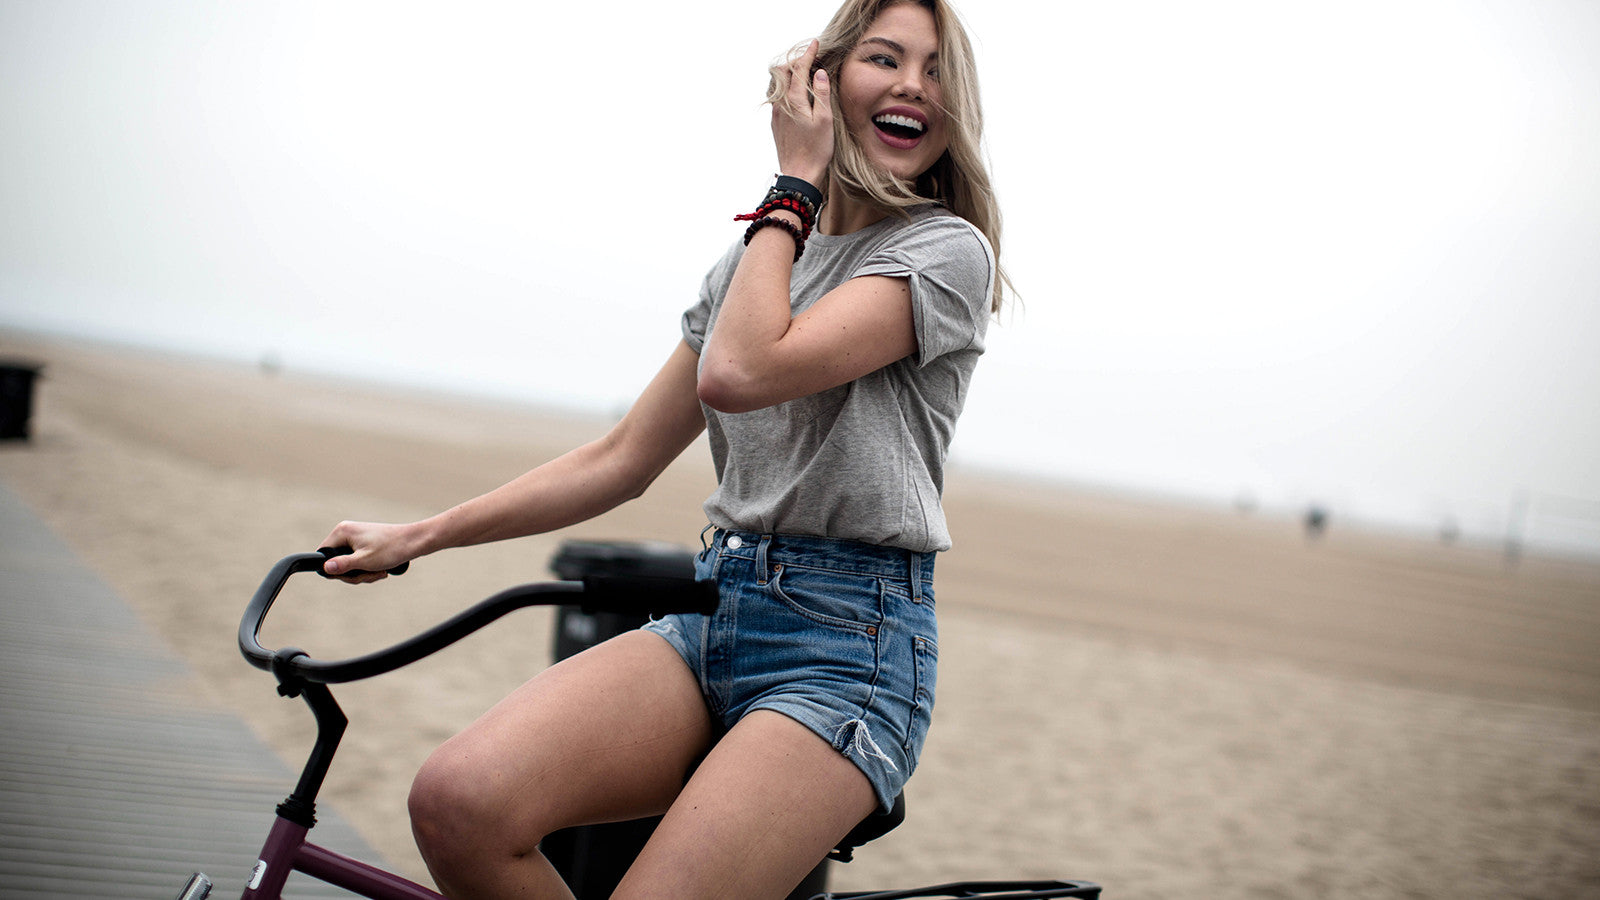 5 Fun Bike Ride Ideas For Any Beach City